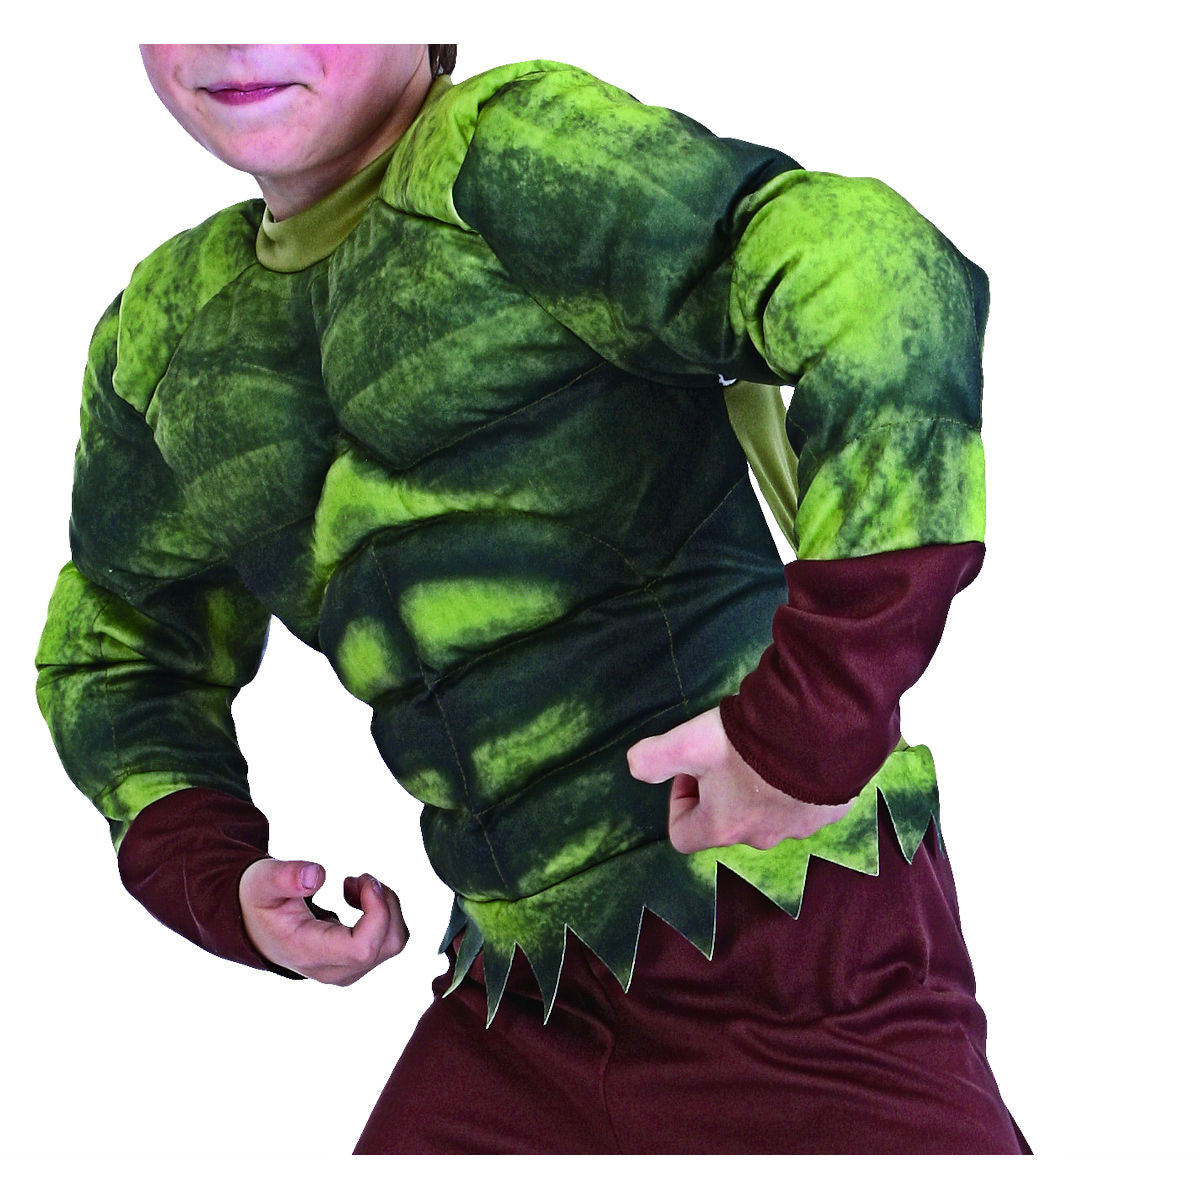 The Hulk Padded Muscle Jumpsuit  Boys Child Costume Fancy Dress